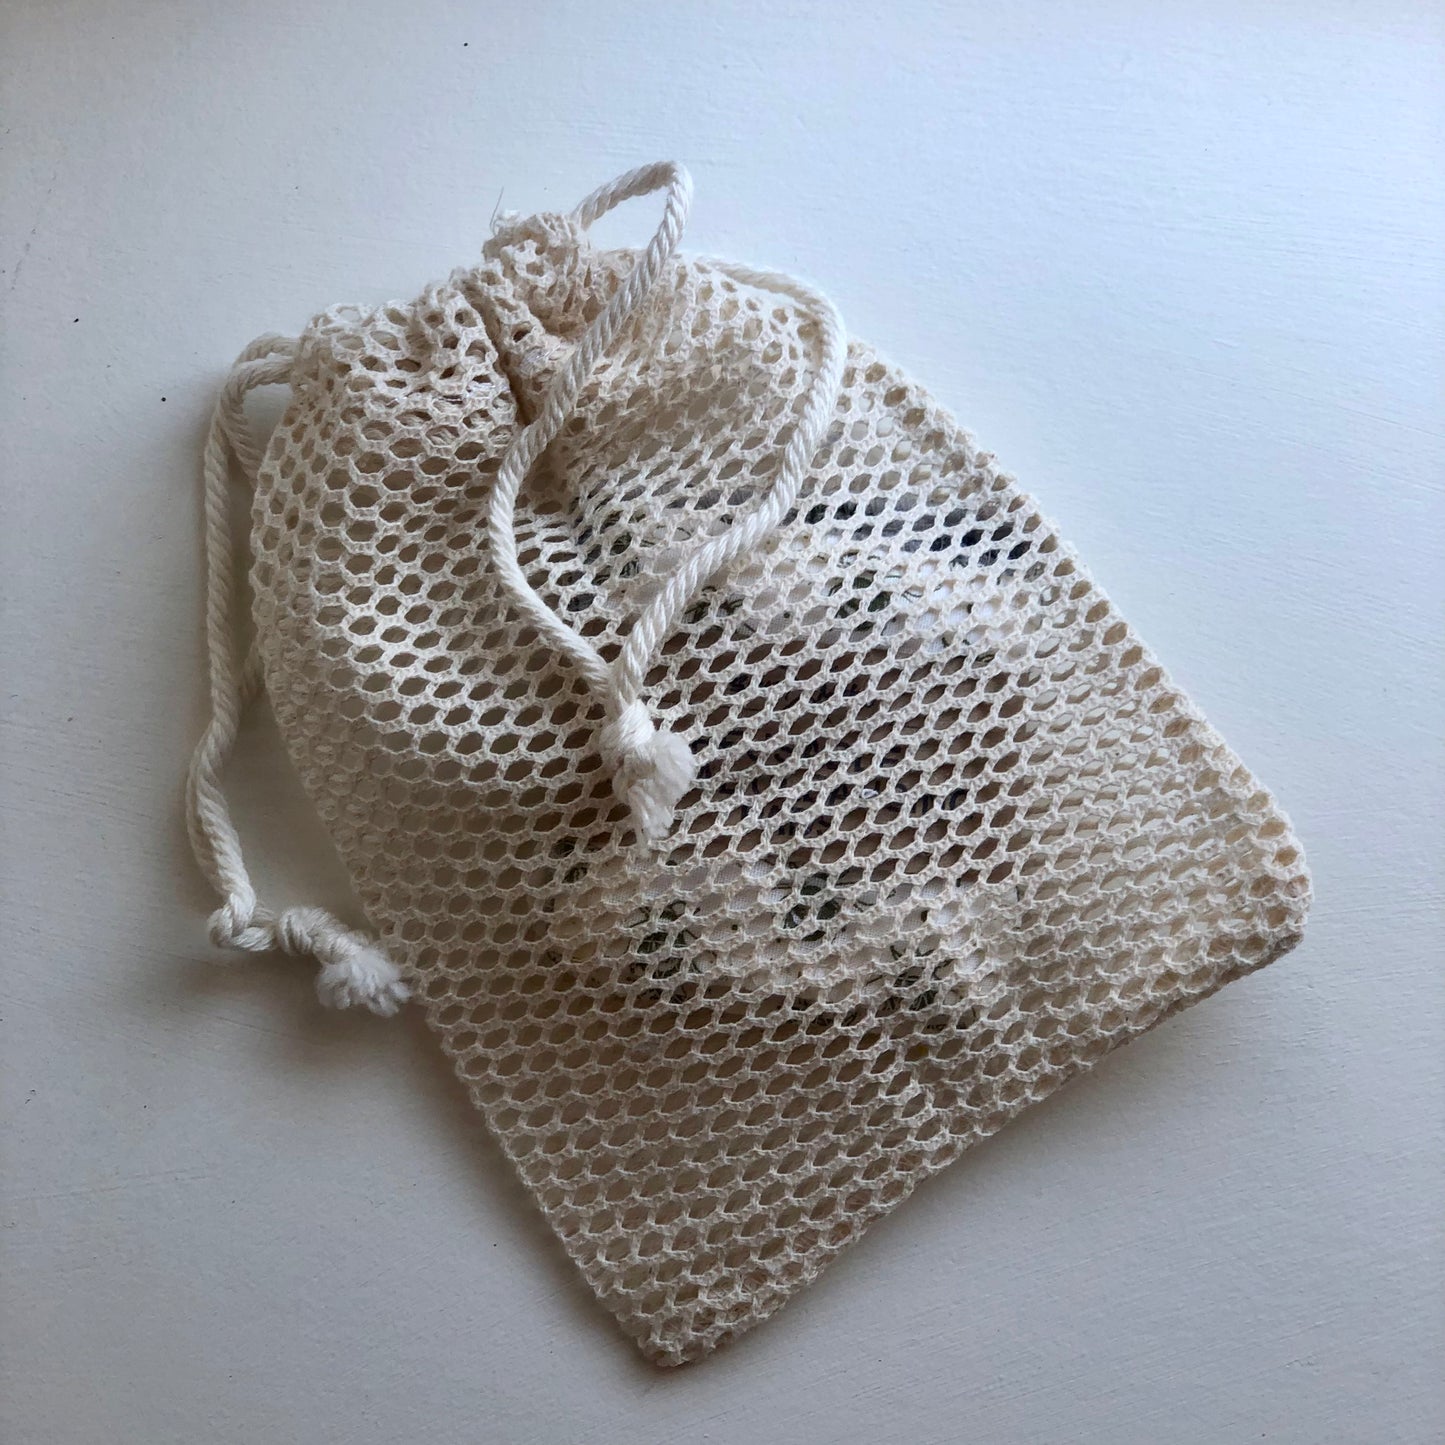 Net Bag - Organic Cotton Delicates Bag